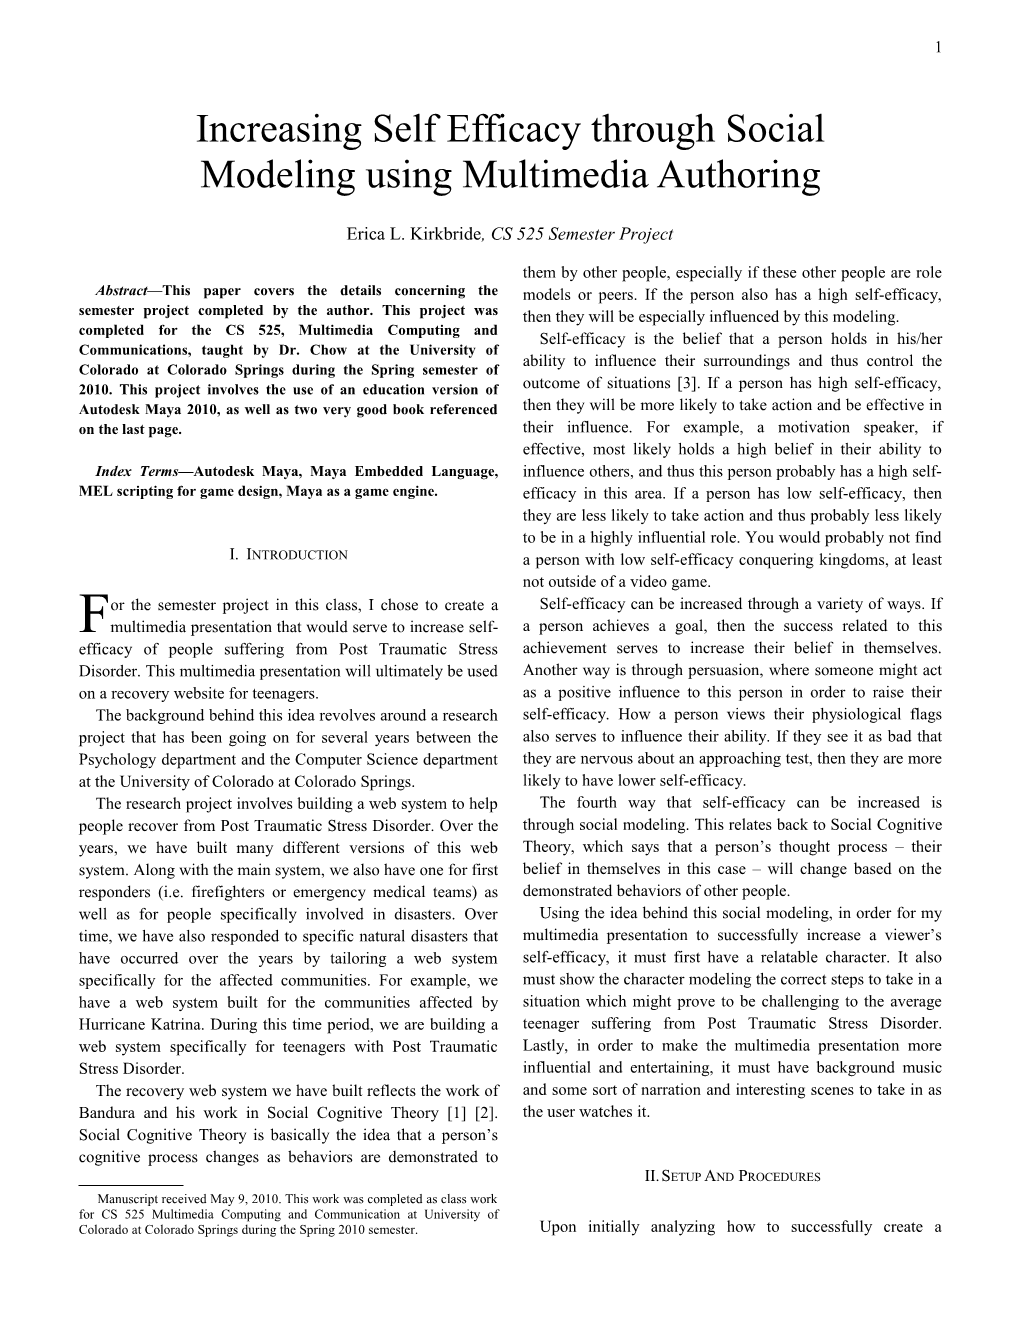 Increasing Self Efficacy Through Social Modeling Using Multimedia Authoring